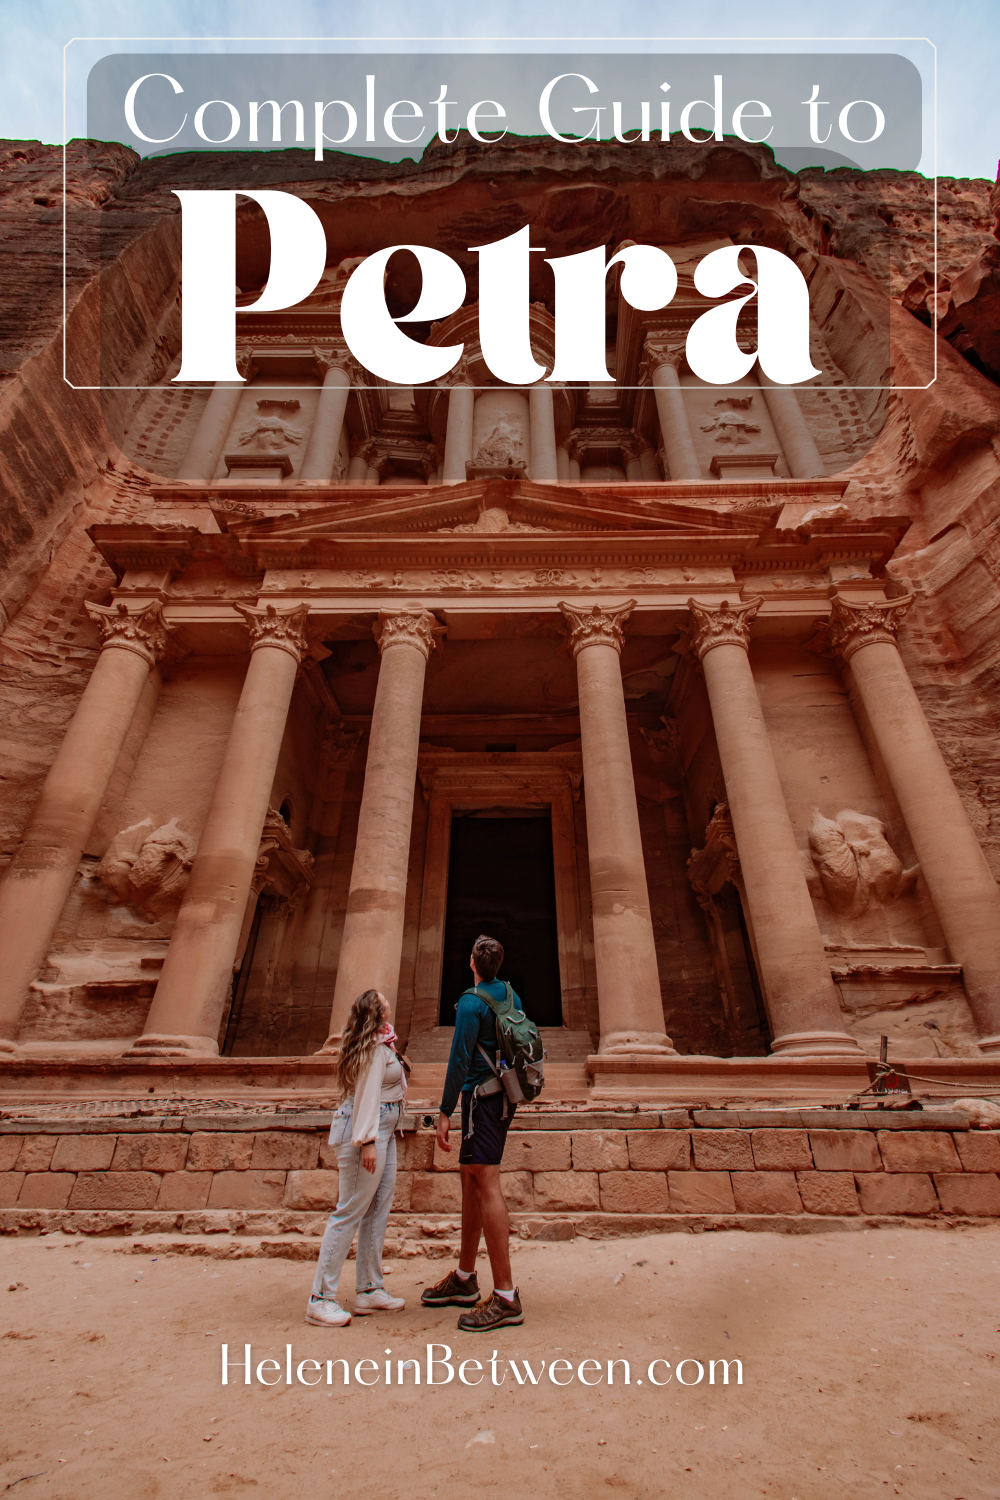 Complete Guide to Petra in Jordan